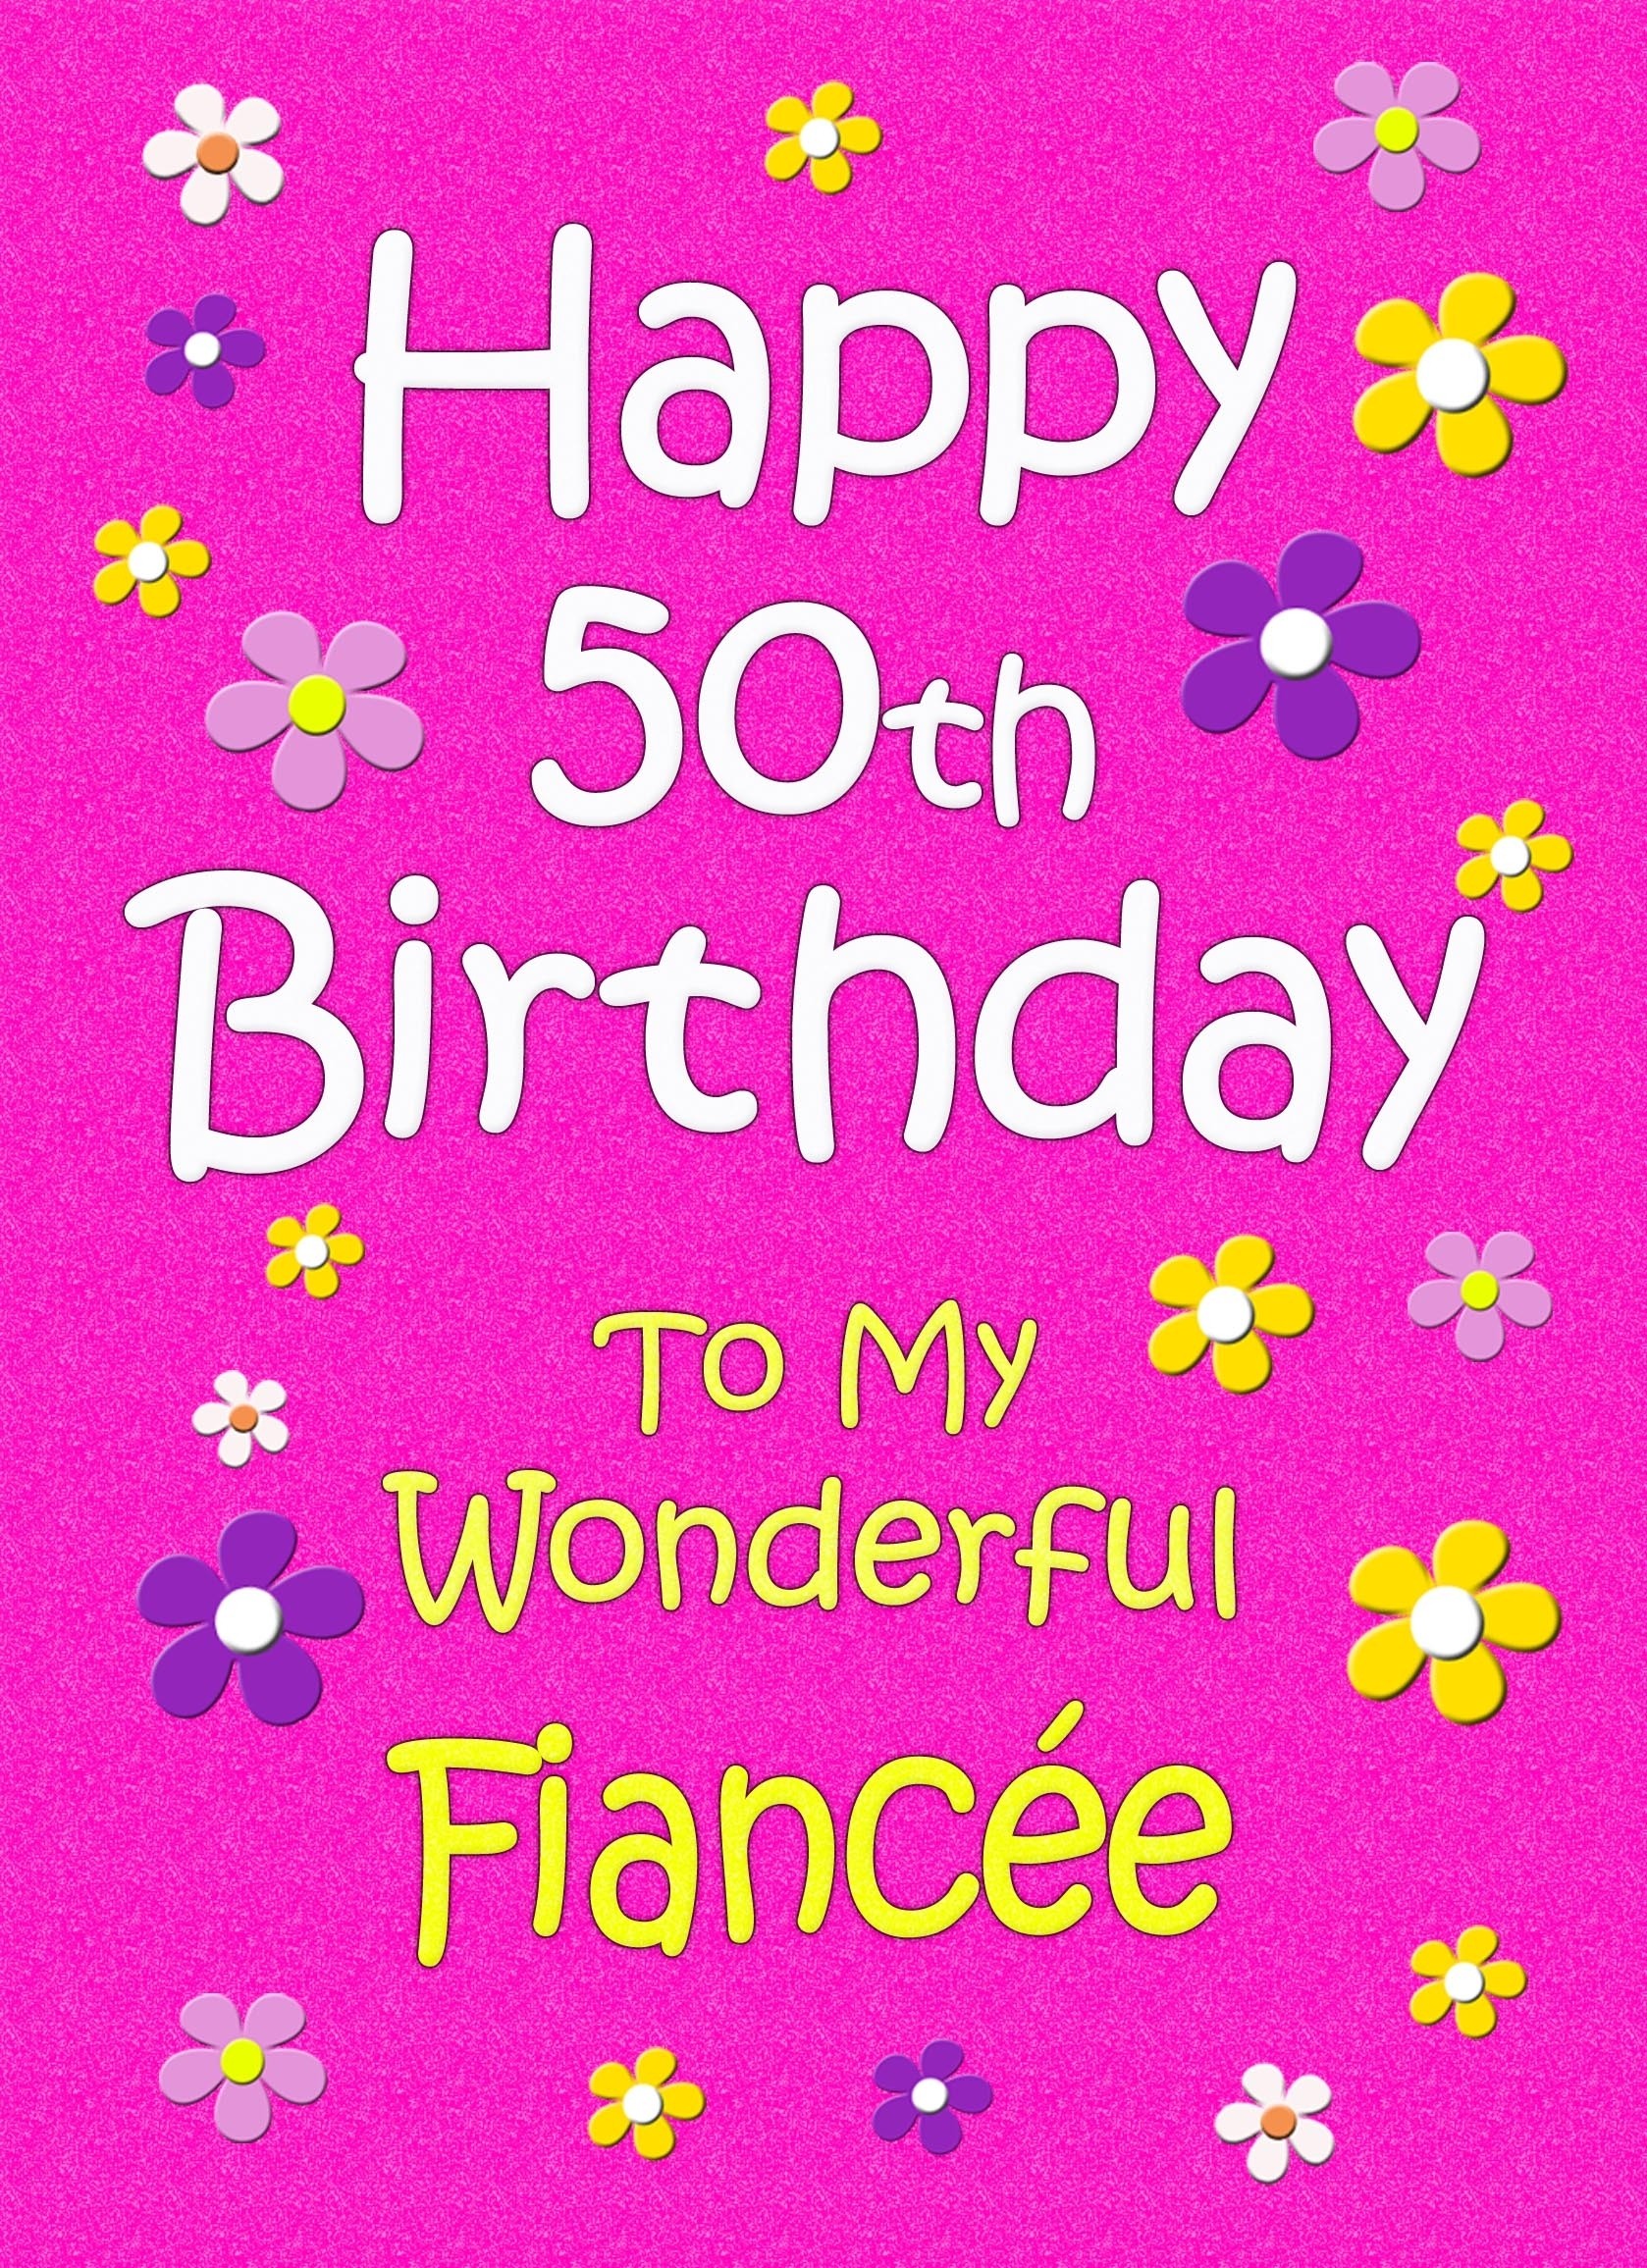 Fiancee 50th Birthday Card (Pink)